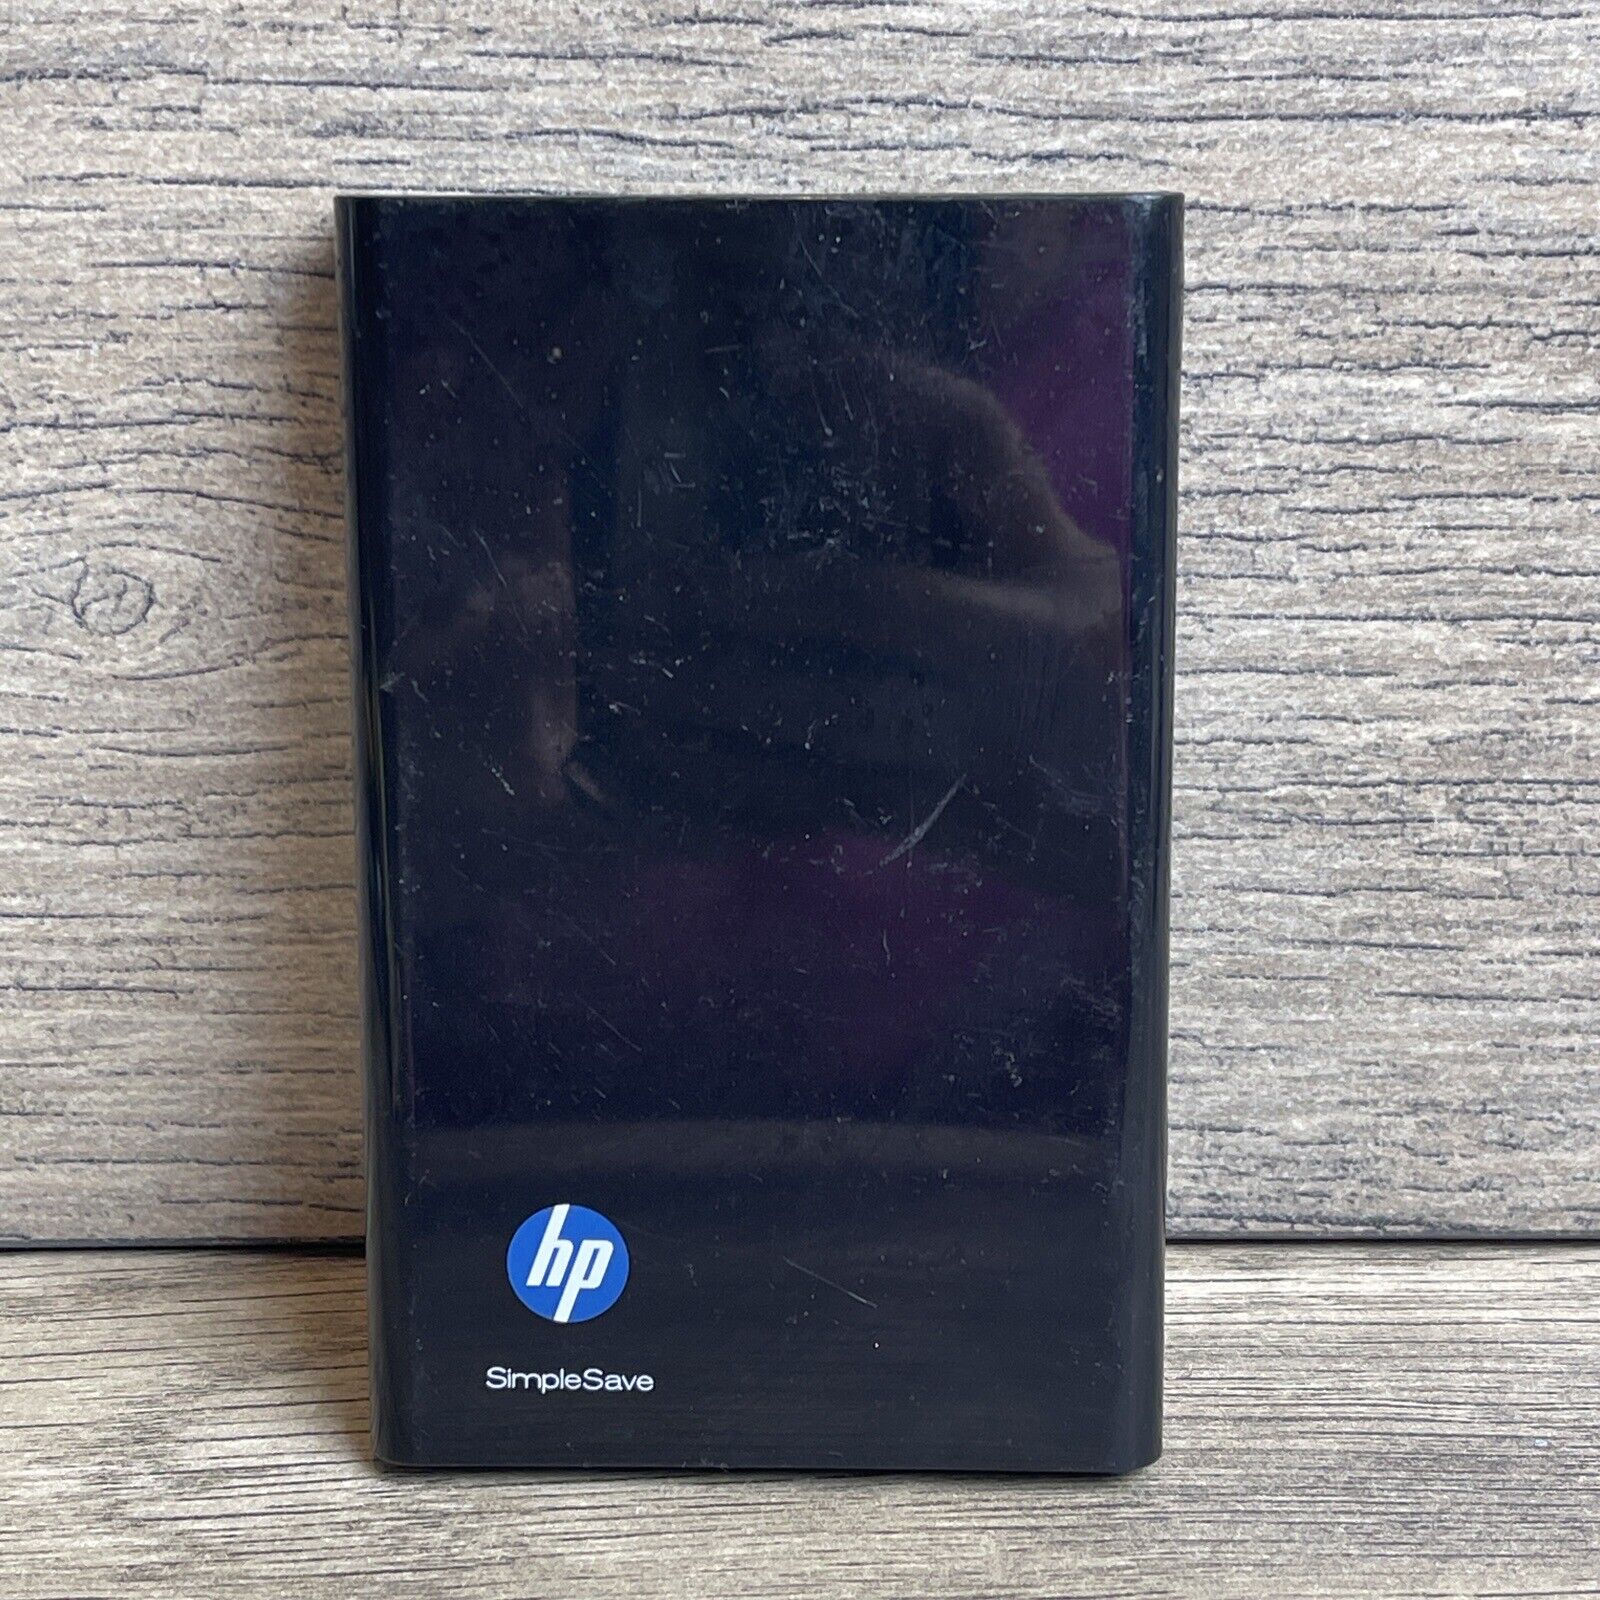 HP SimpleSave SD320A Black 320GB USB 2.0 Portable 2.5-inch External Hard Drives